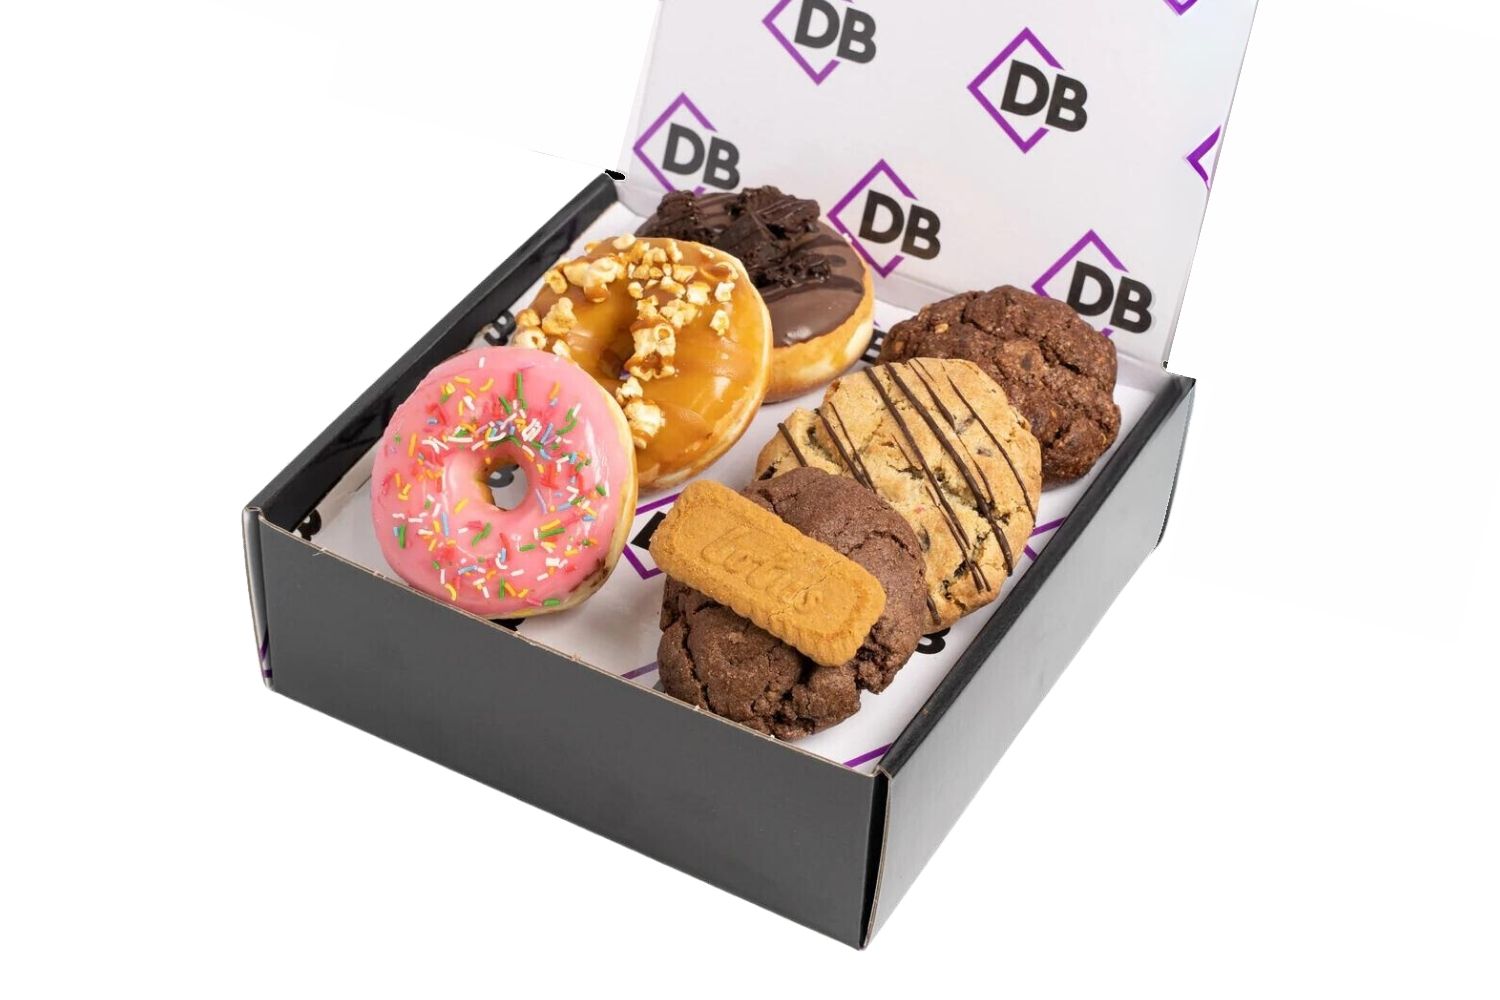 Dessert boxes vegan cookies and doughnuts